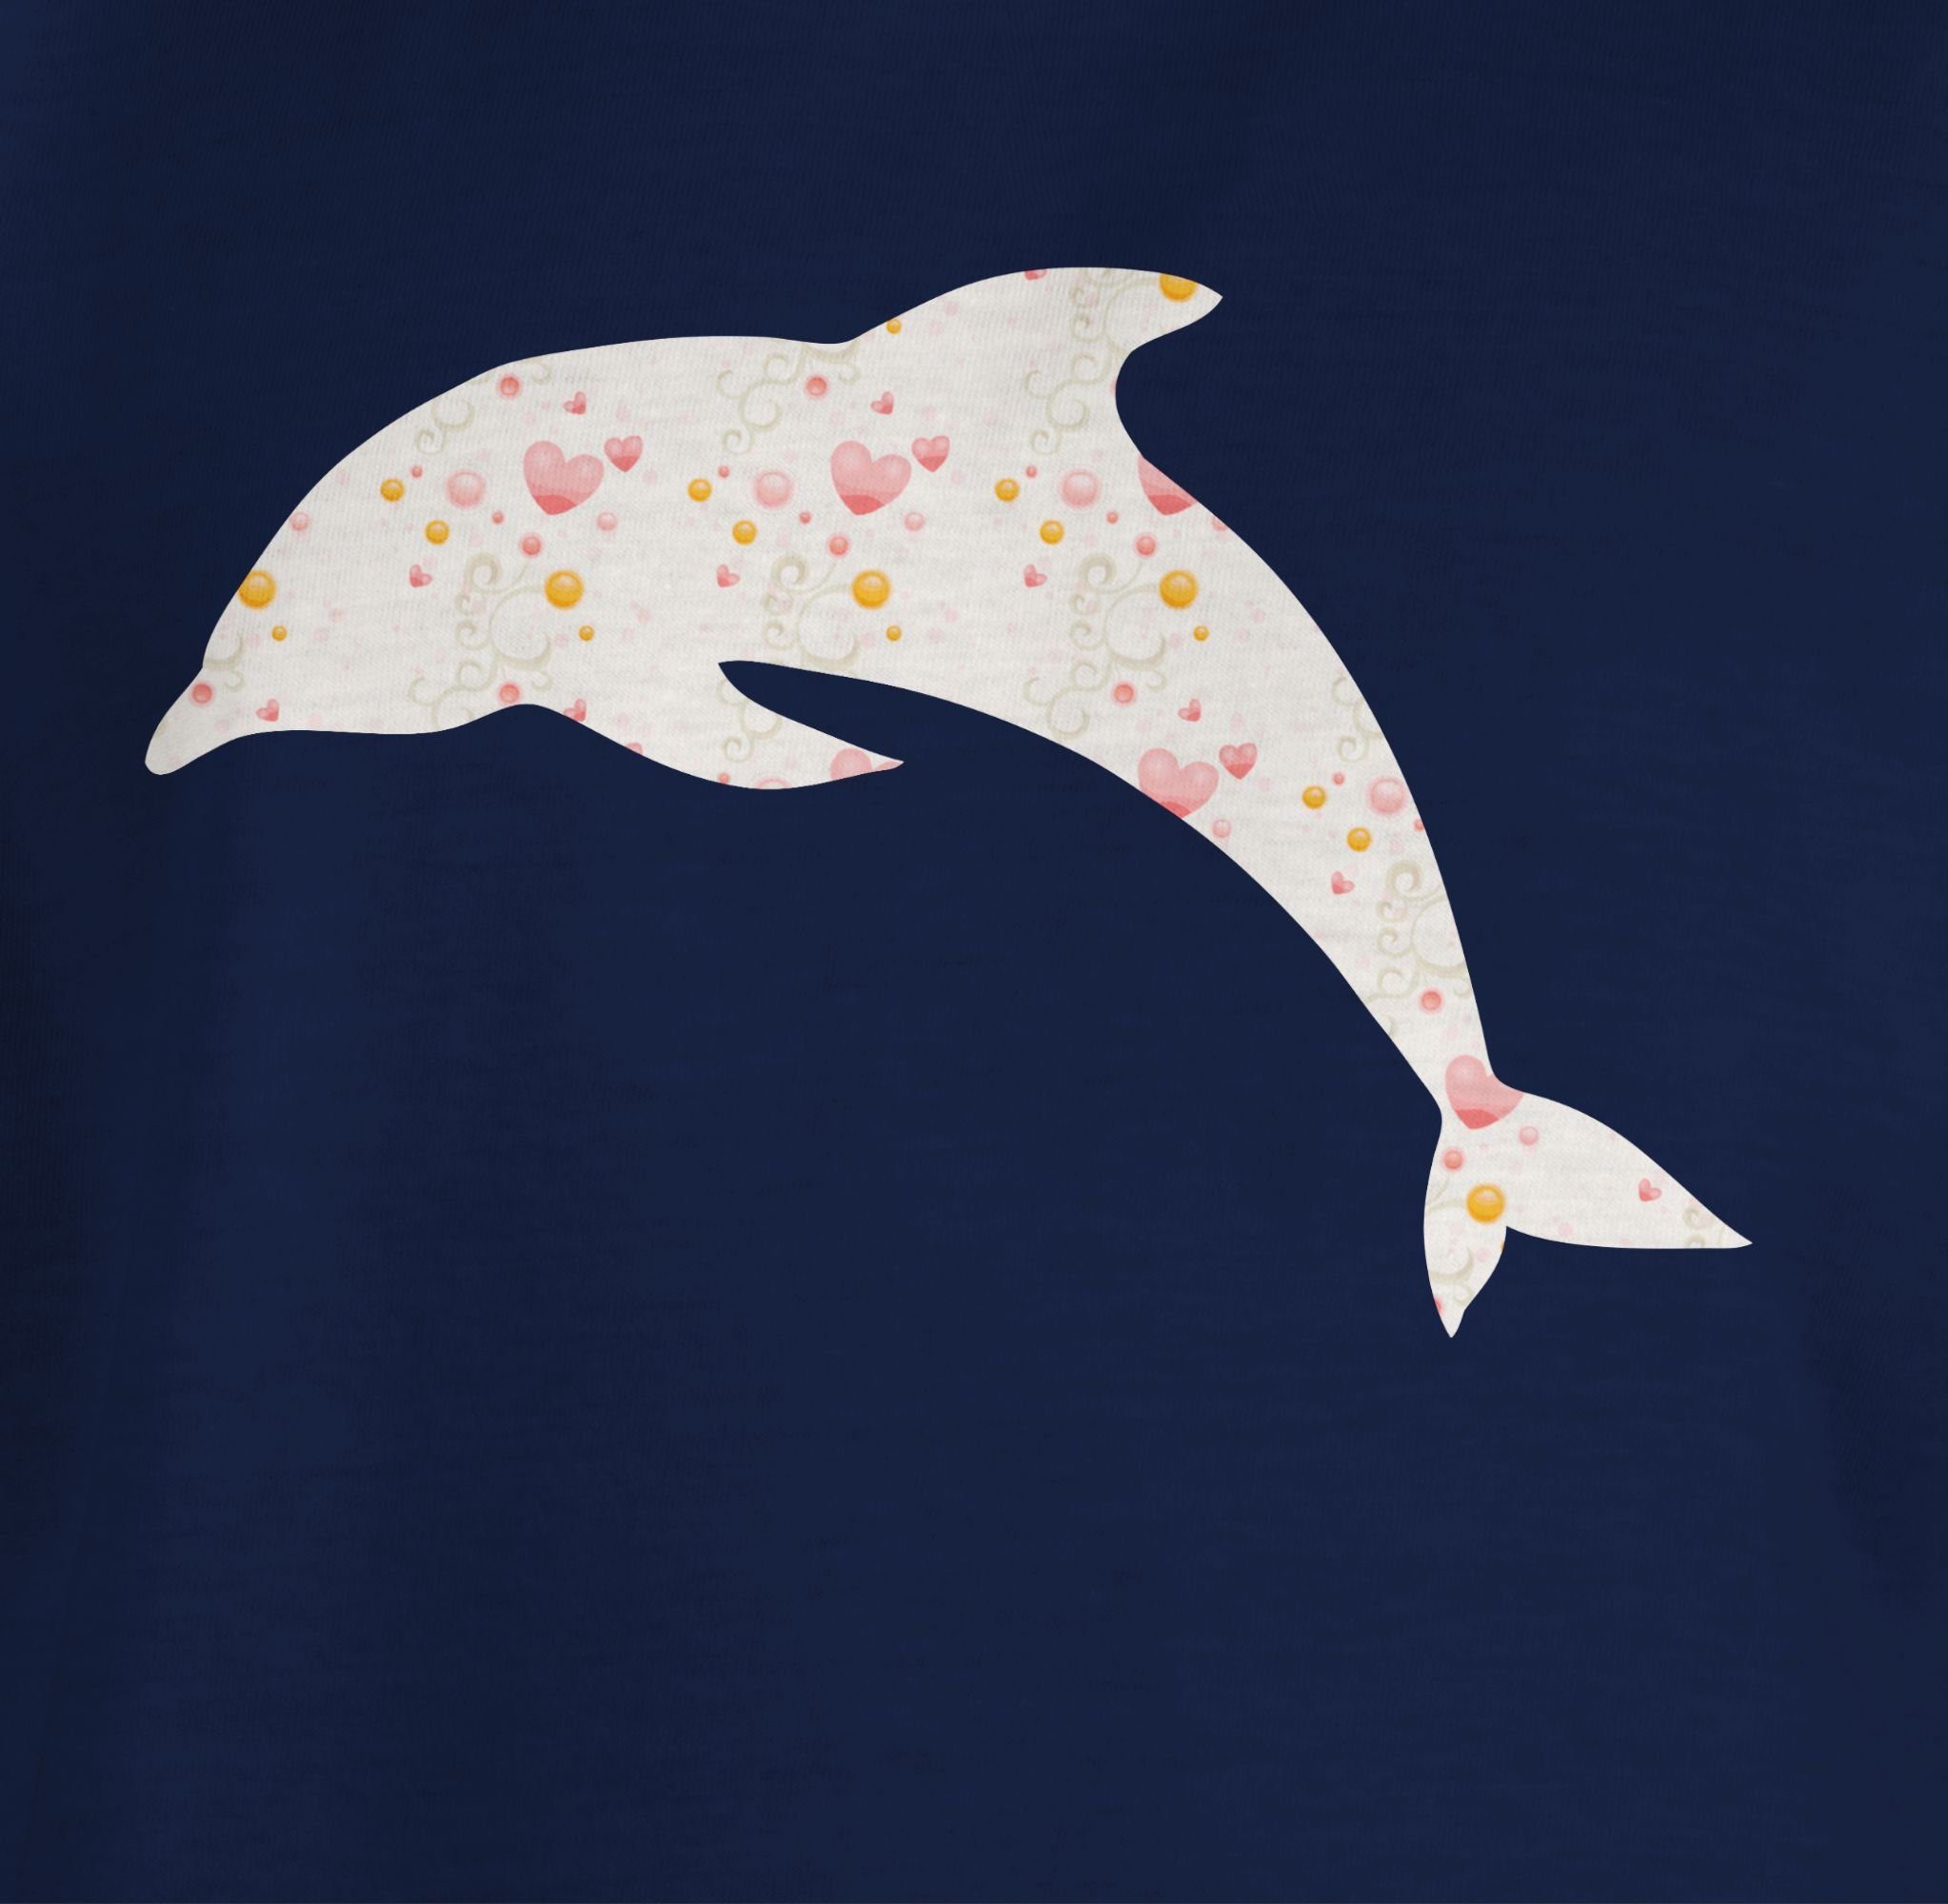 Herzen T-Shirt Shirtracer 1 Tiermotiv Dunkelblau Animal Delfin Print